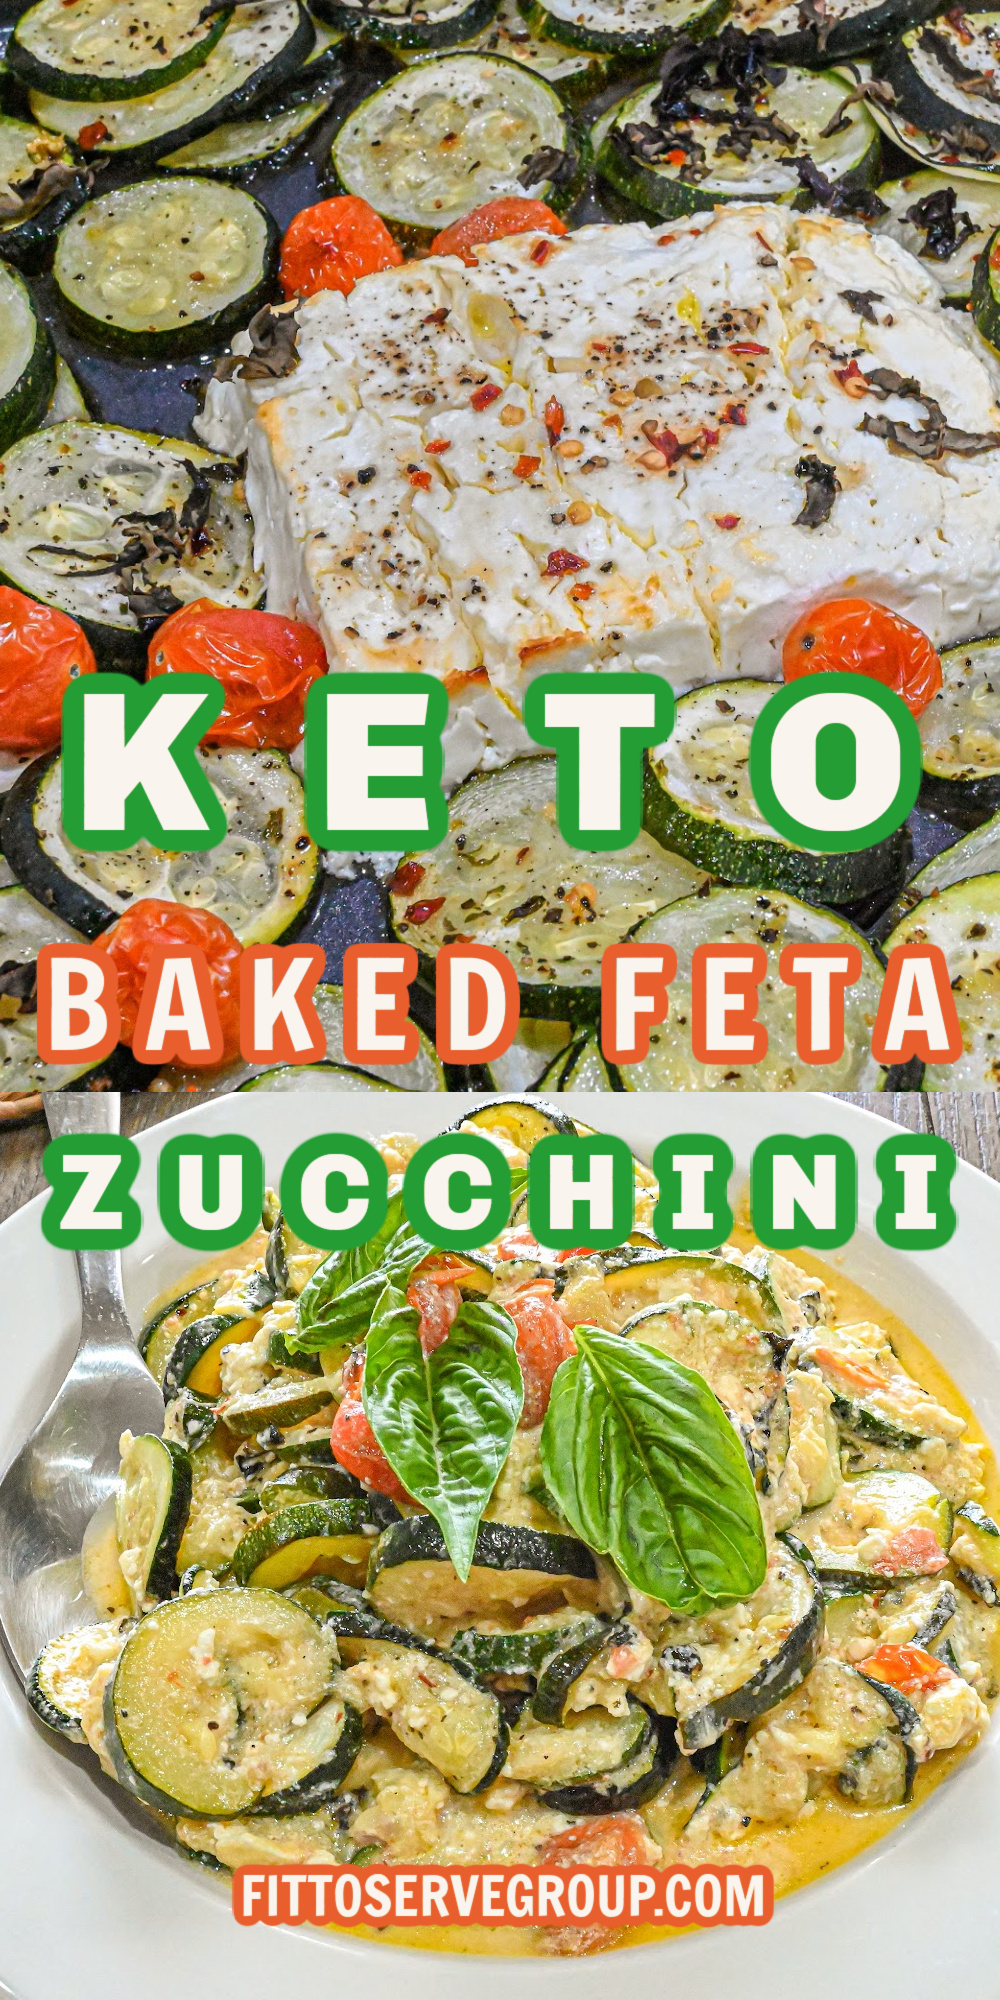 Keto Baked Feta Zucchini Pin